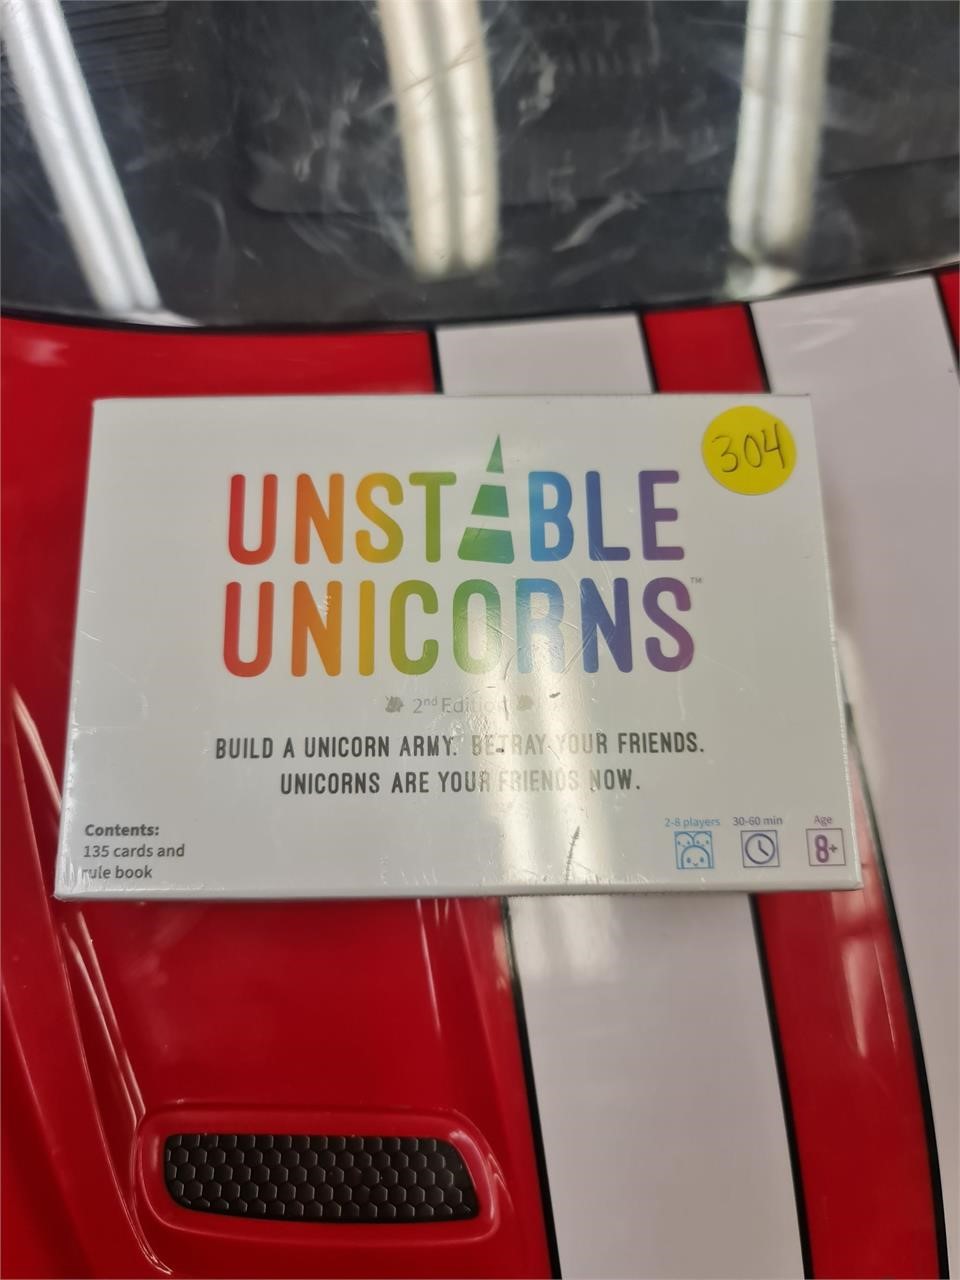 Unstoble unicorns